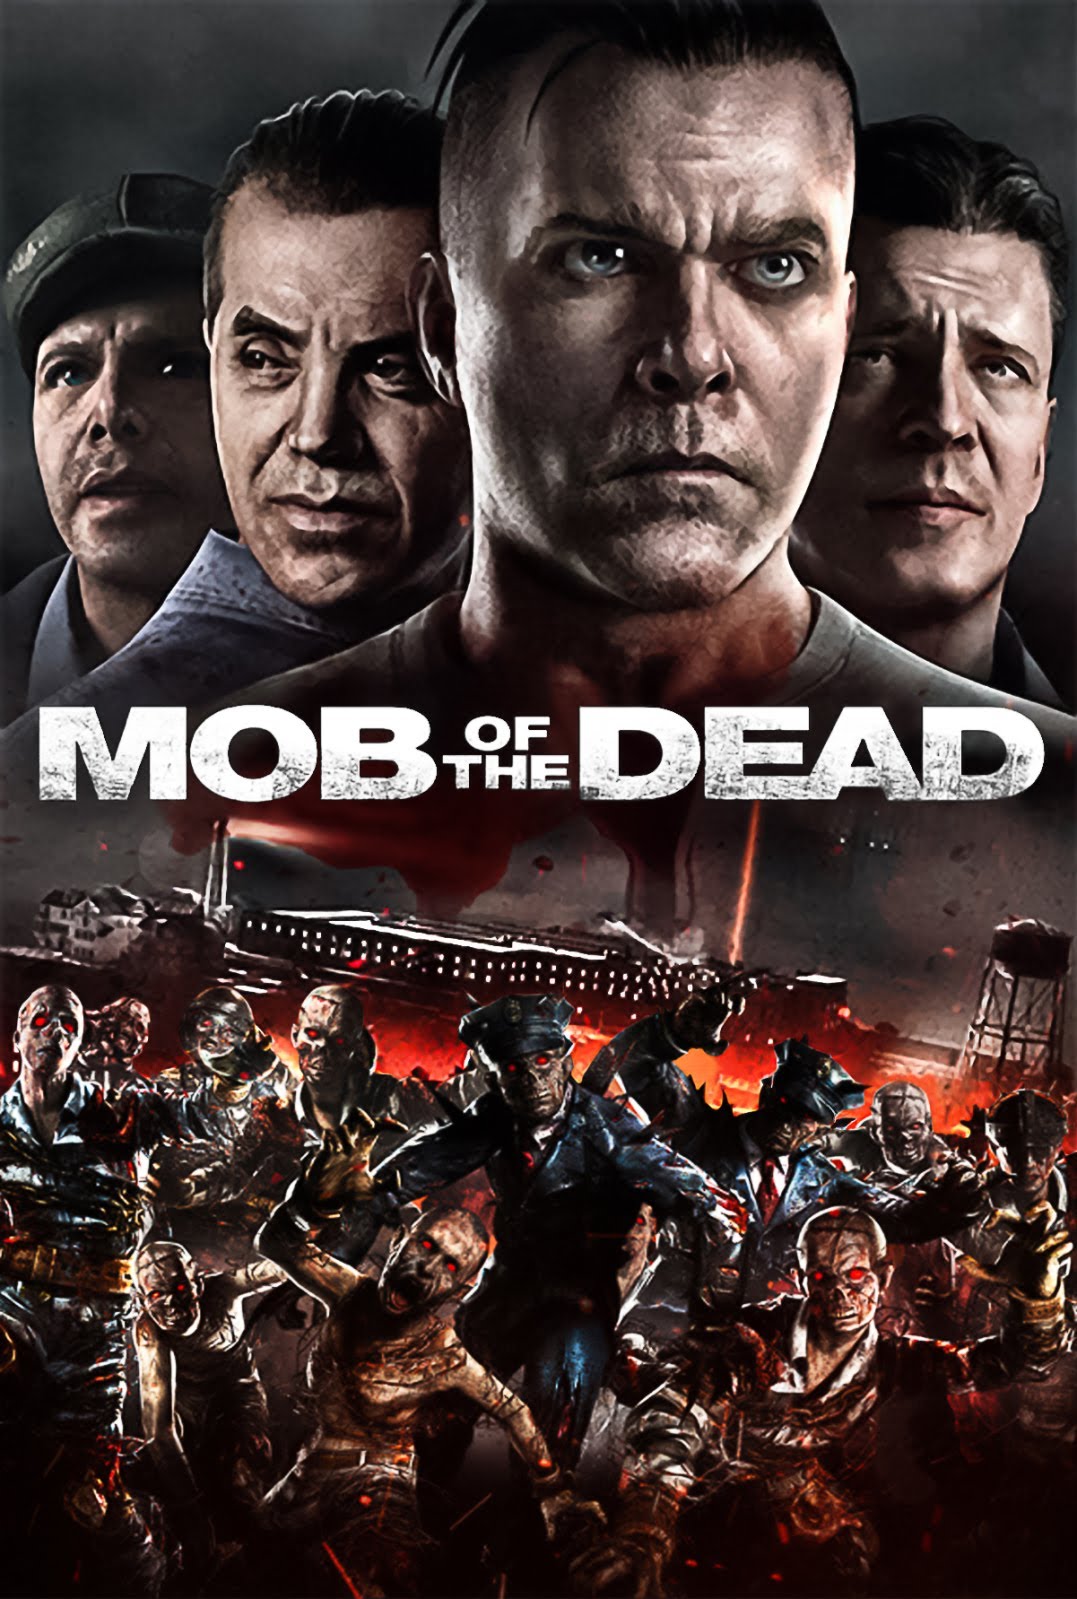 mob-of-the-dead-alcatraz-image-call-of-duty-zombies-custom-zombie-maps-more-moddb